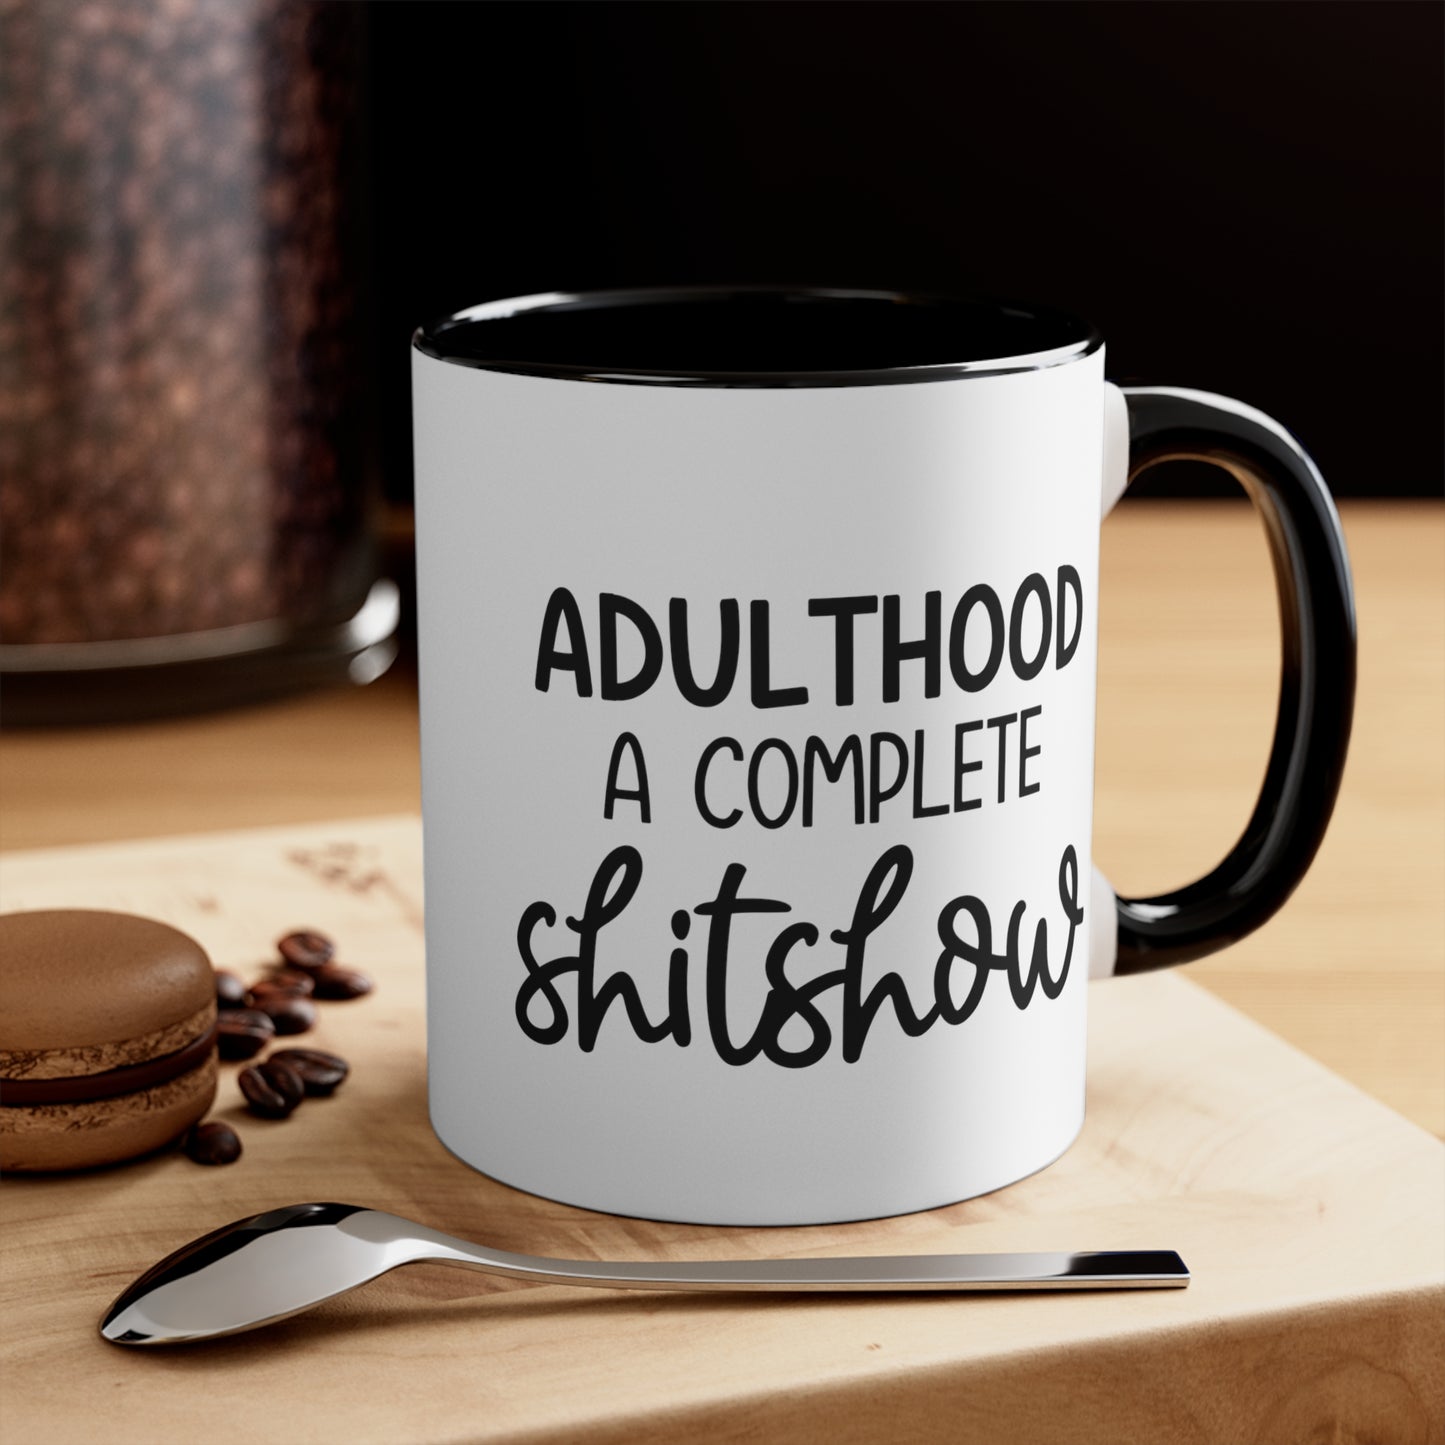 Adulthood A Complete Shitshow Accent Coffee Mug, 11oz